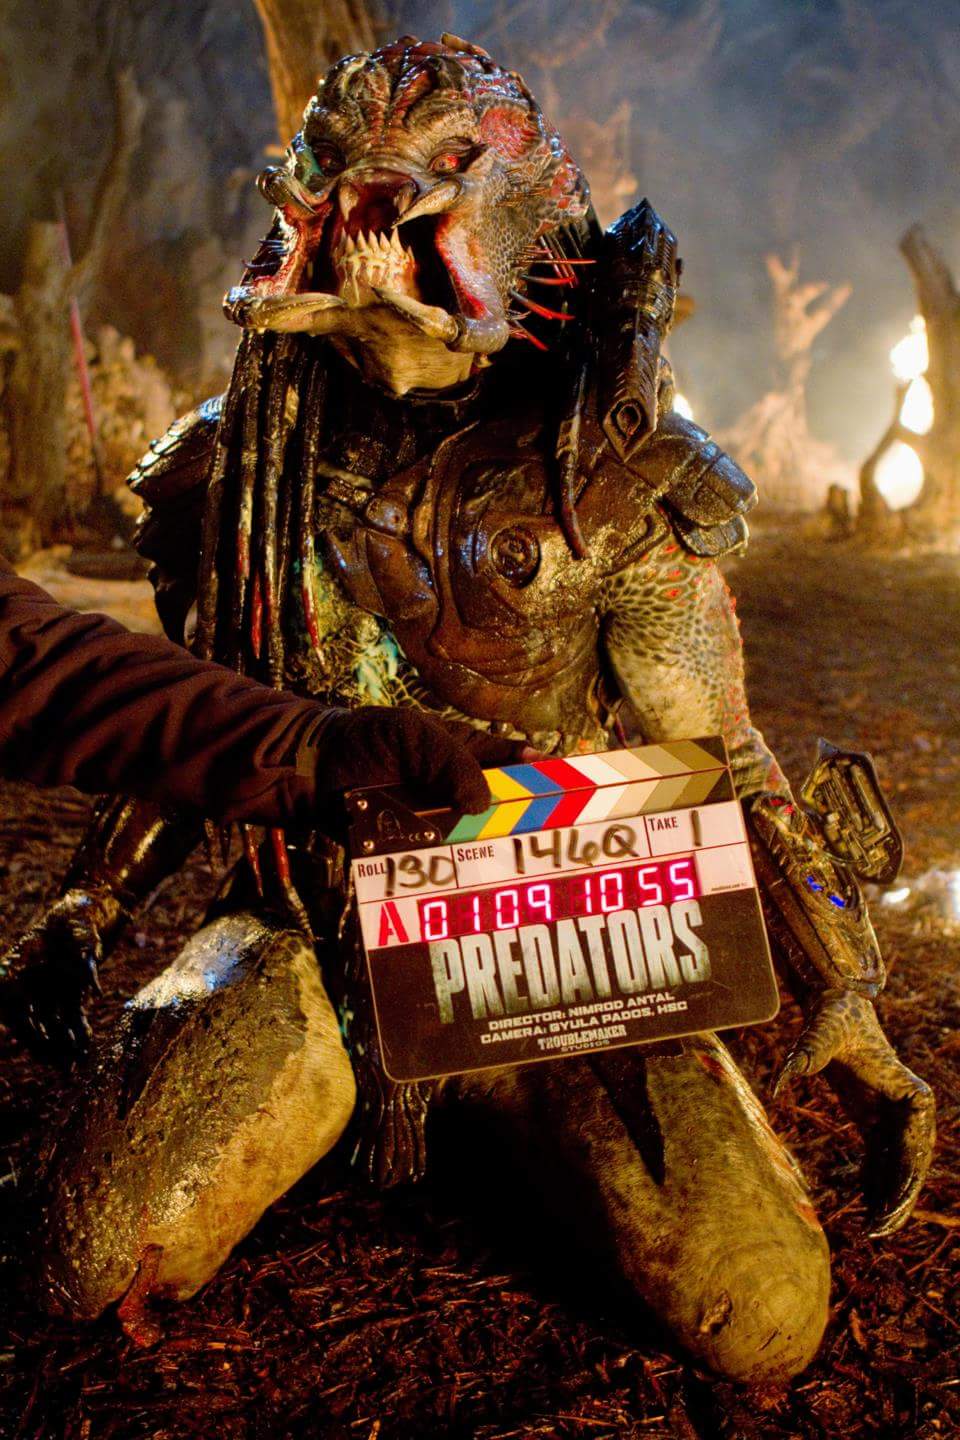 Predator Movie Images images